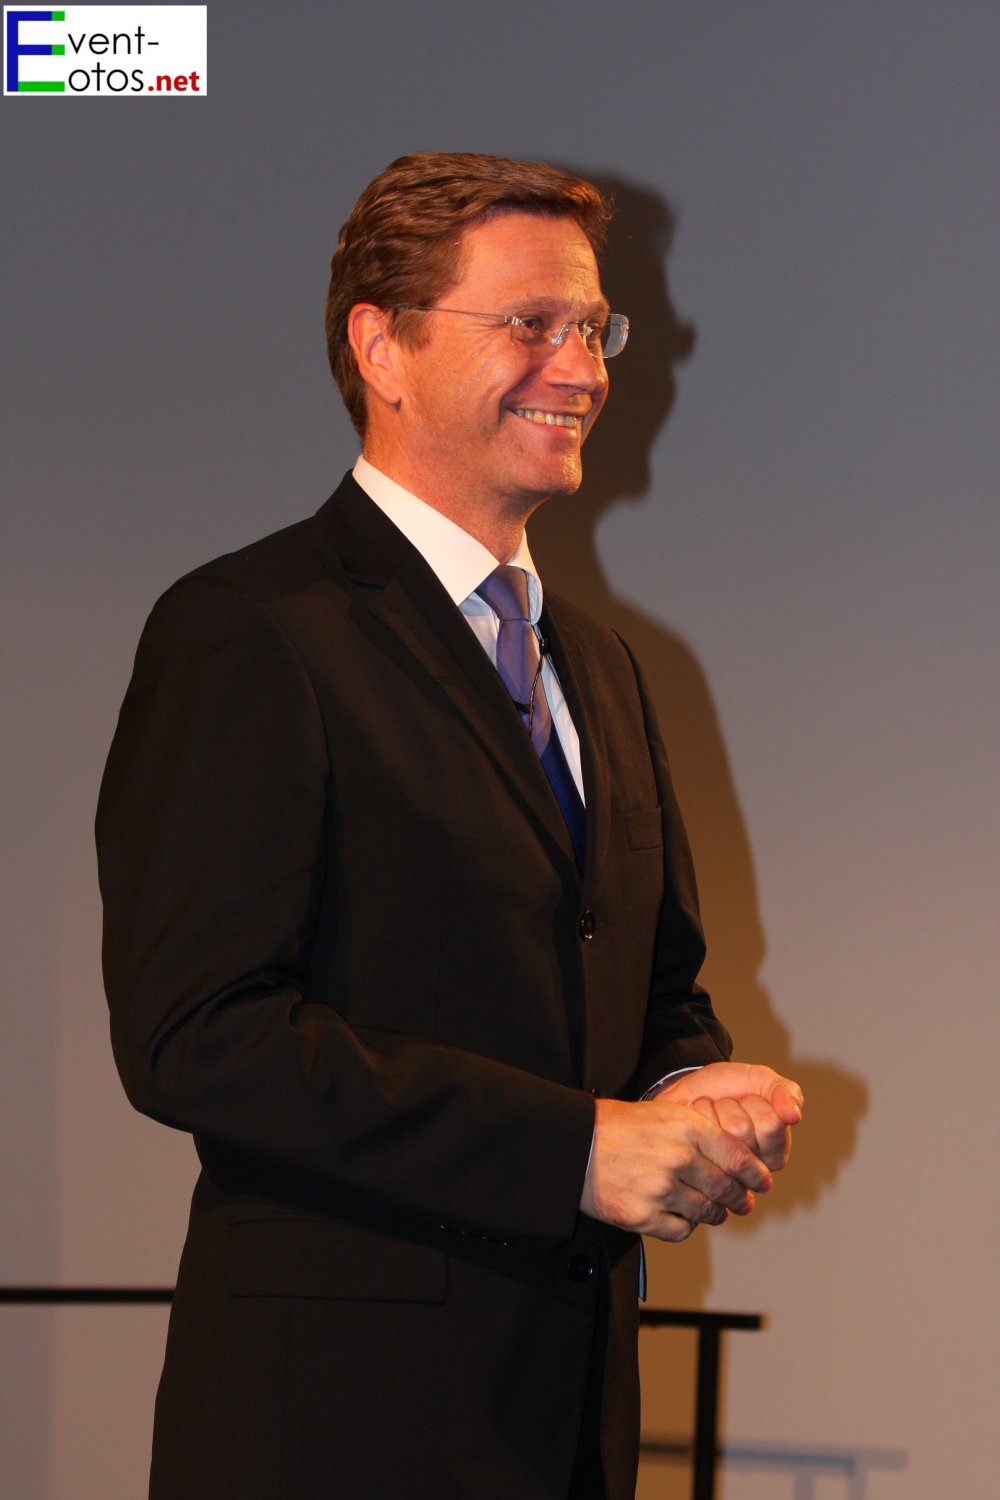 Guido Westerwelle (FDP)
